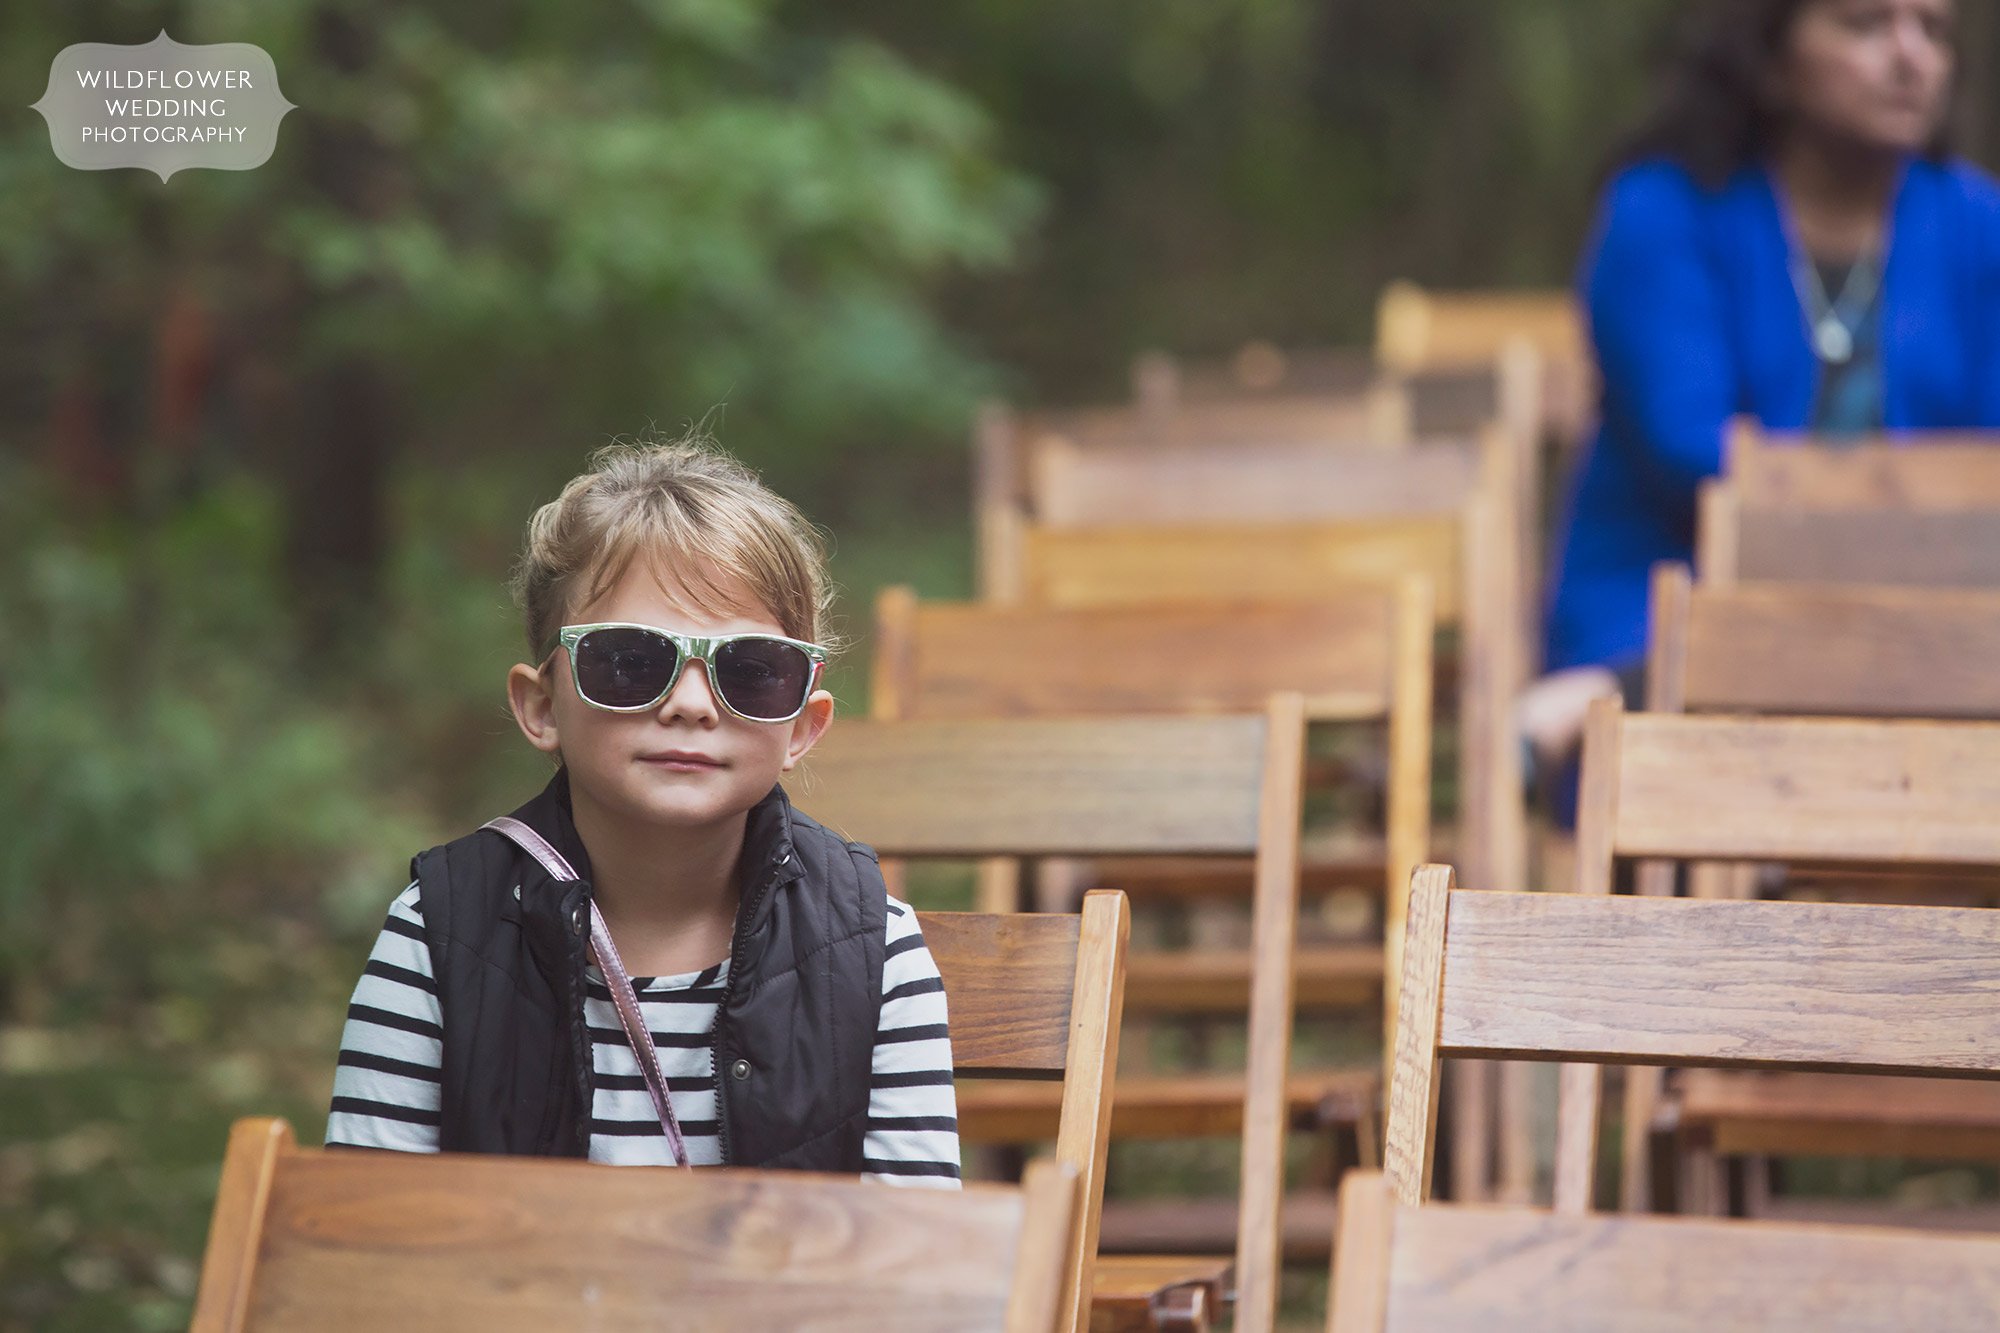 Funny photo of kid in sunglasses as wedding guest at Schwinn Barn in KS.